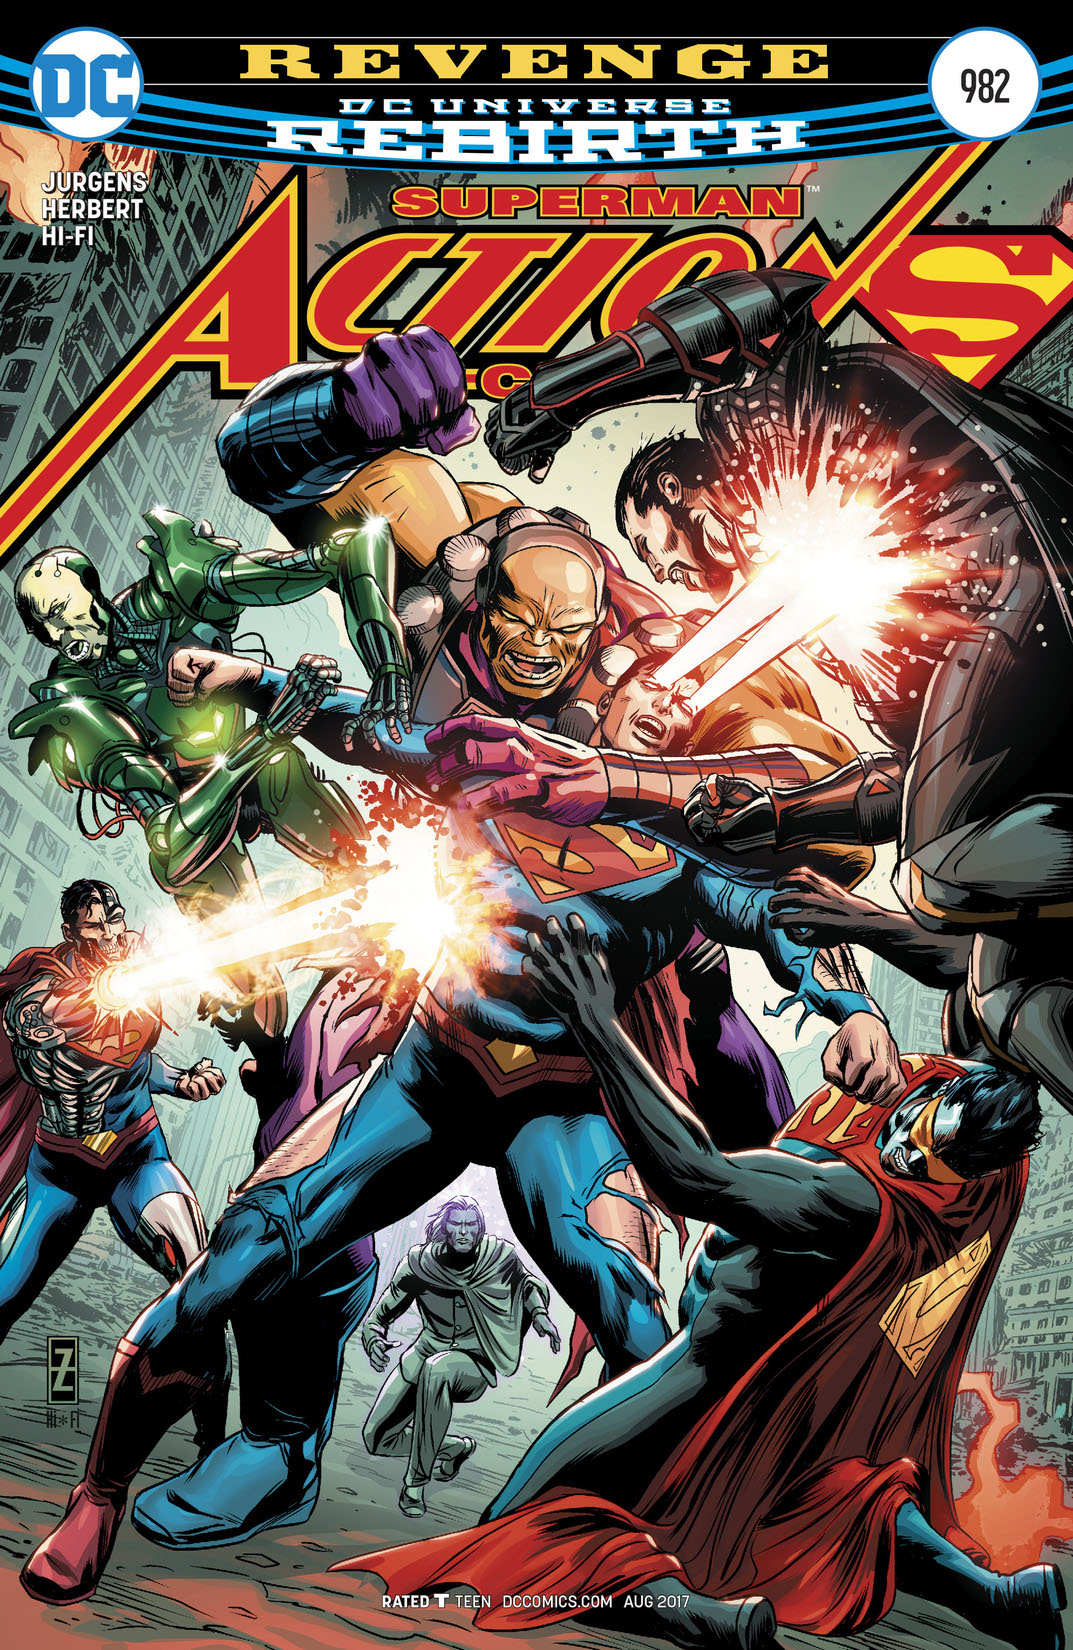 Action Comics (2016-) #982 preview images